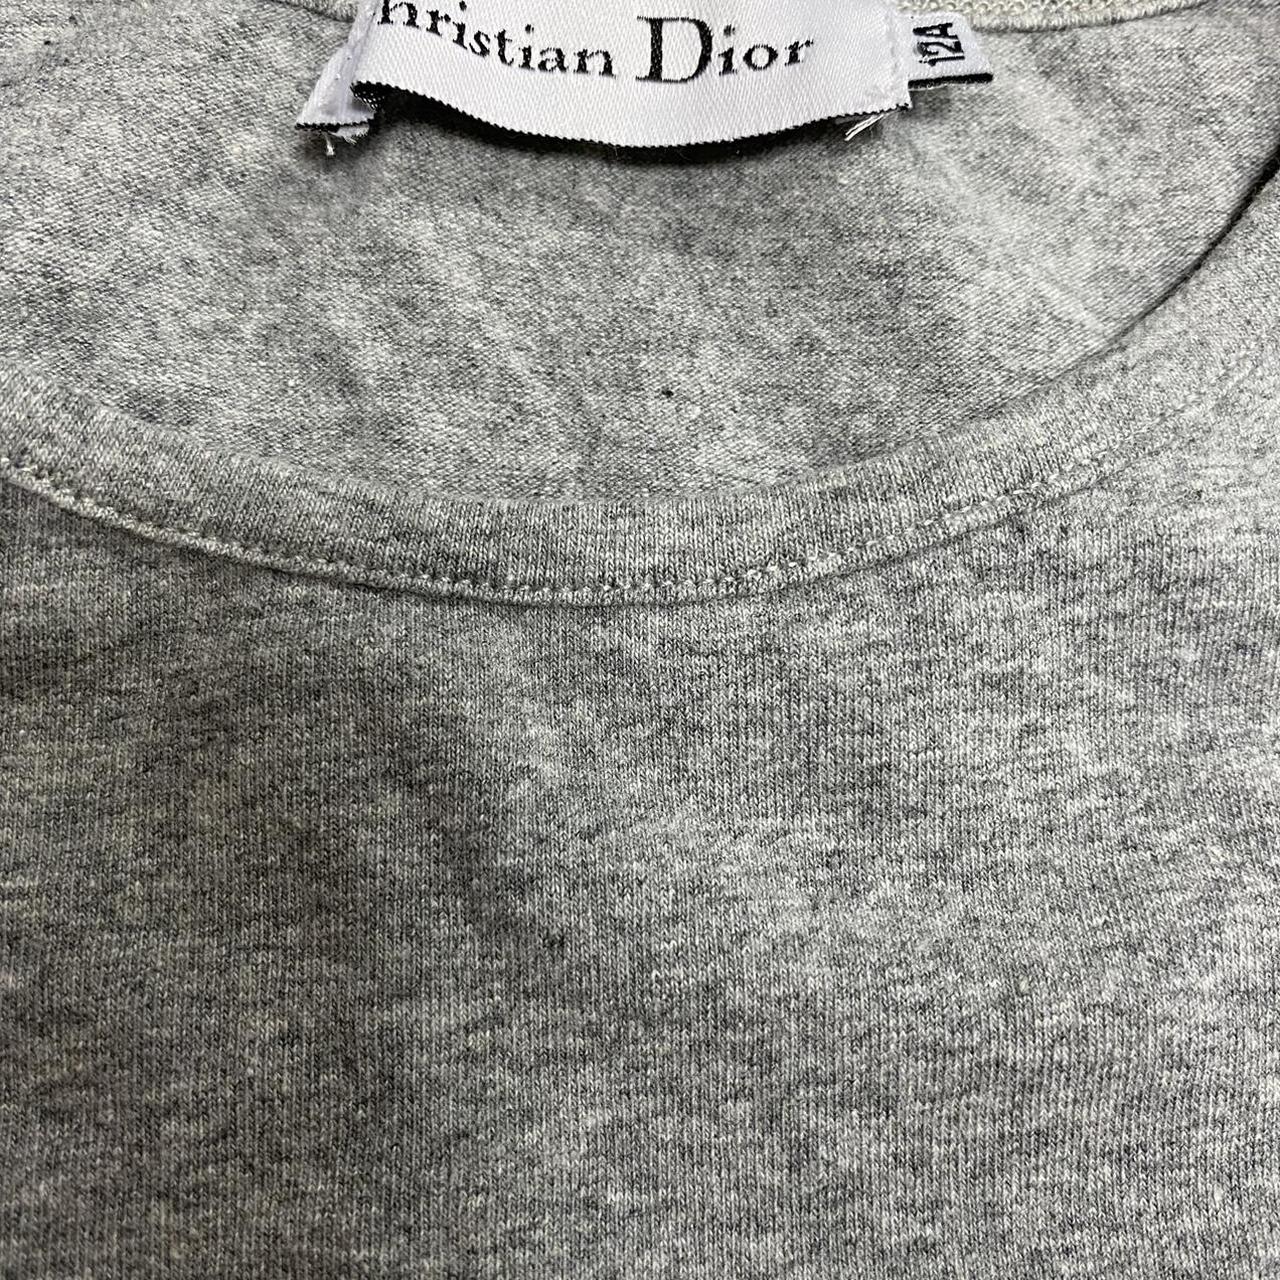 Christian Dior miss Dior kids size monogram grey... - Depop